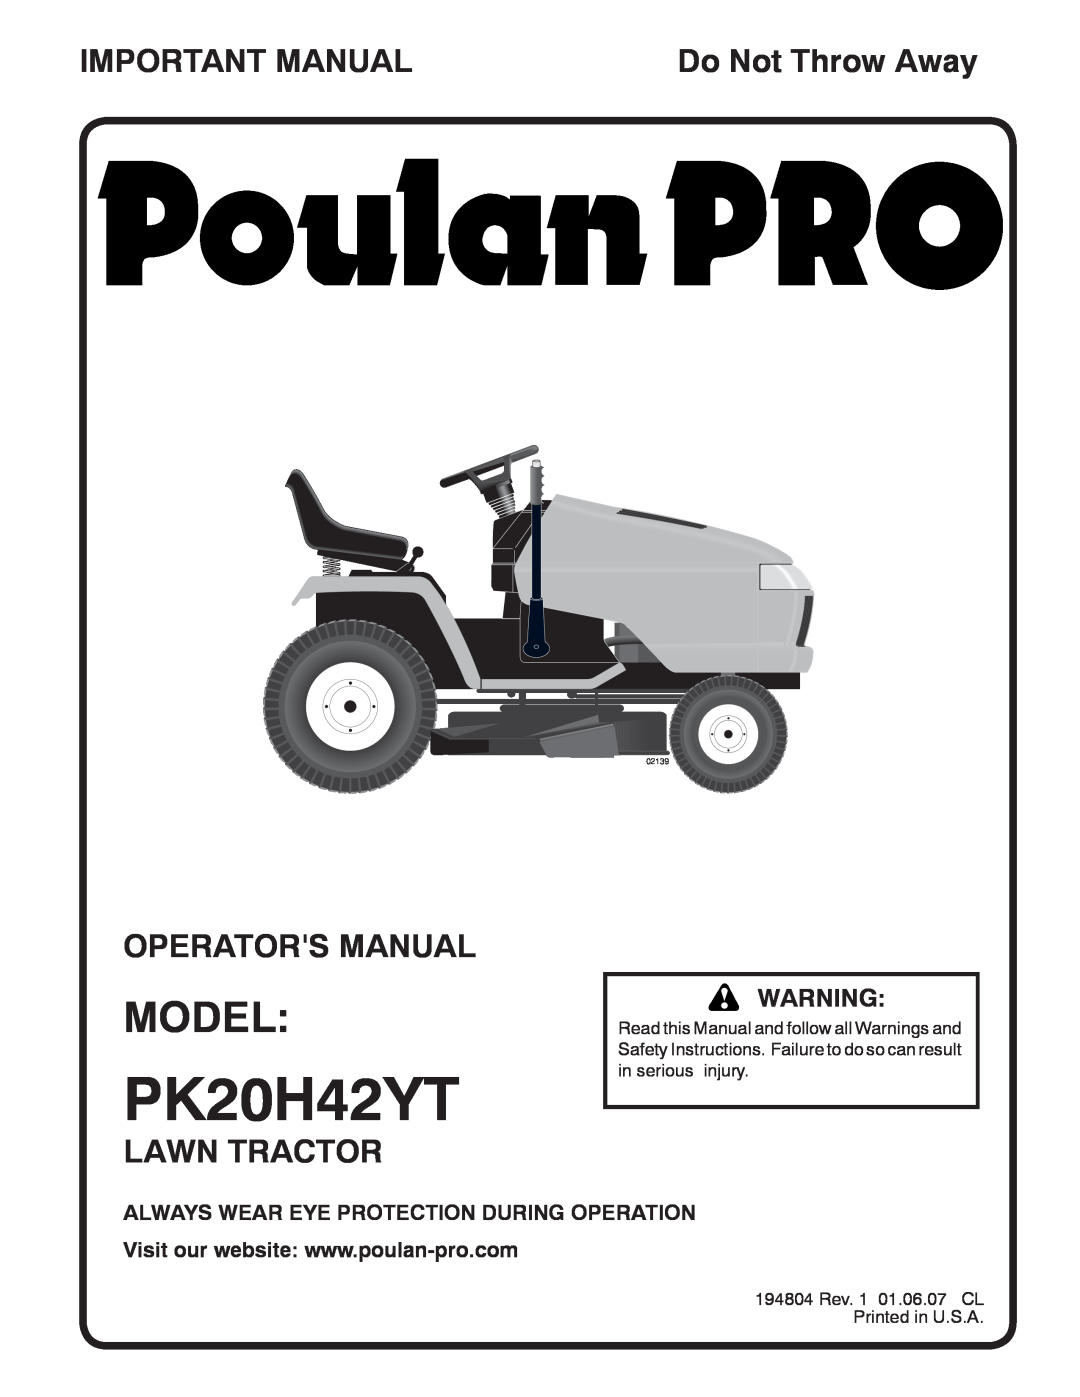 Poulan PK20H42YT manual Model, Important Manual, Operators Manual, Lawn Tractor, Do Not Throw Away,  